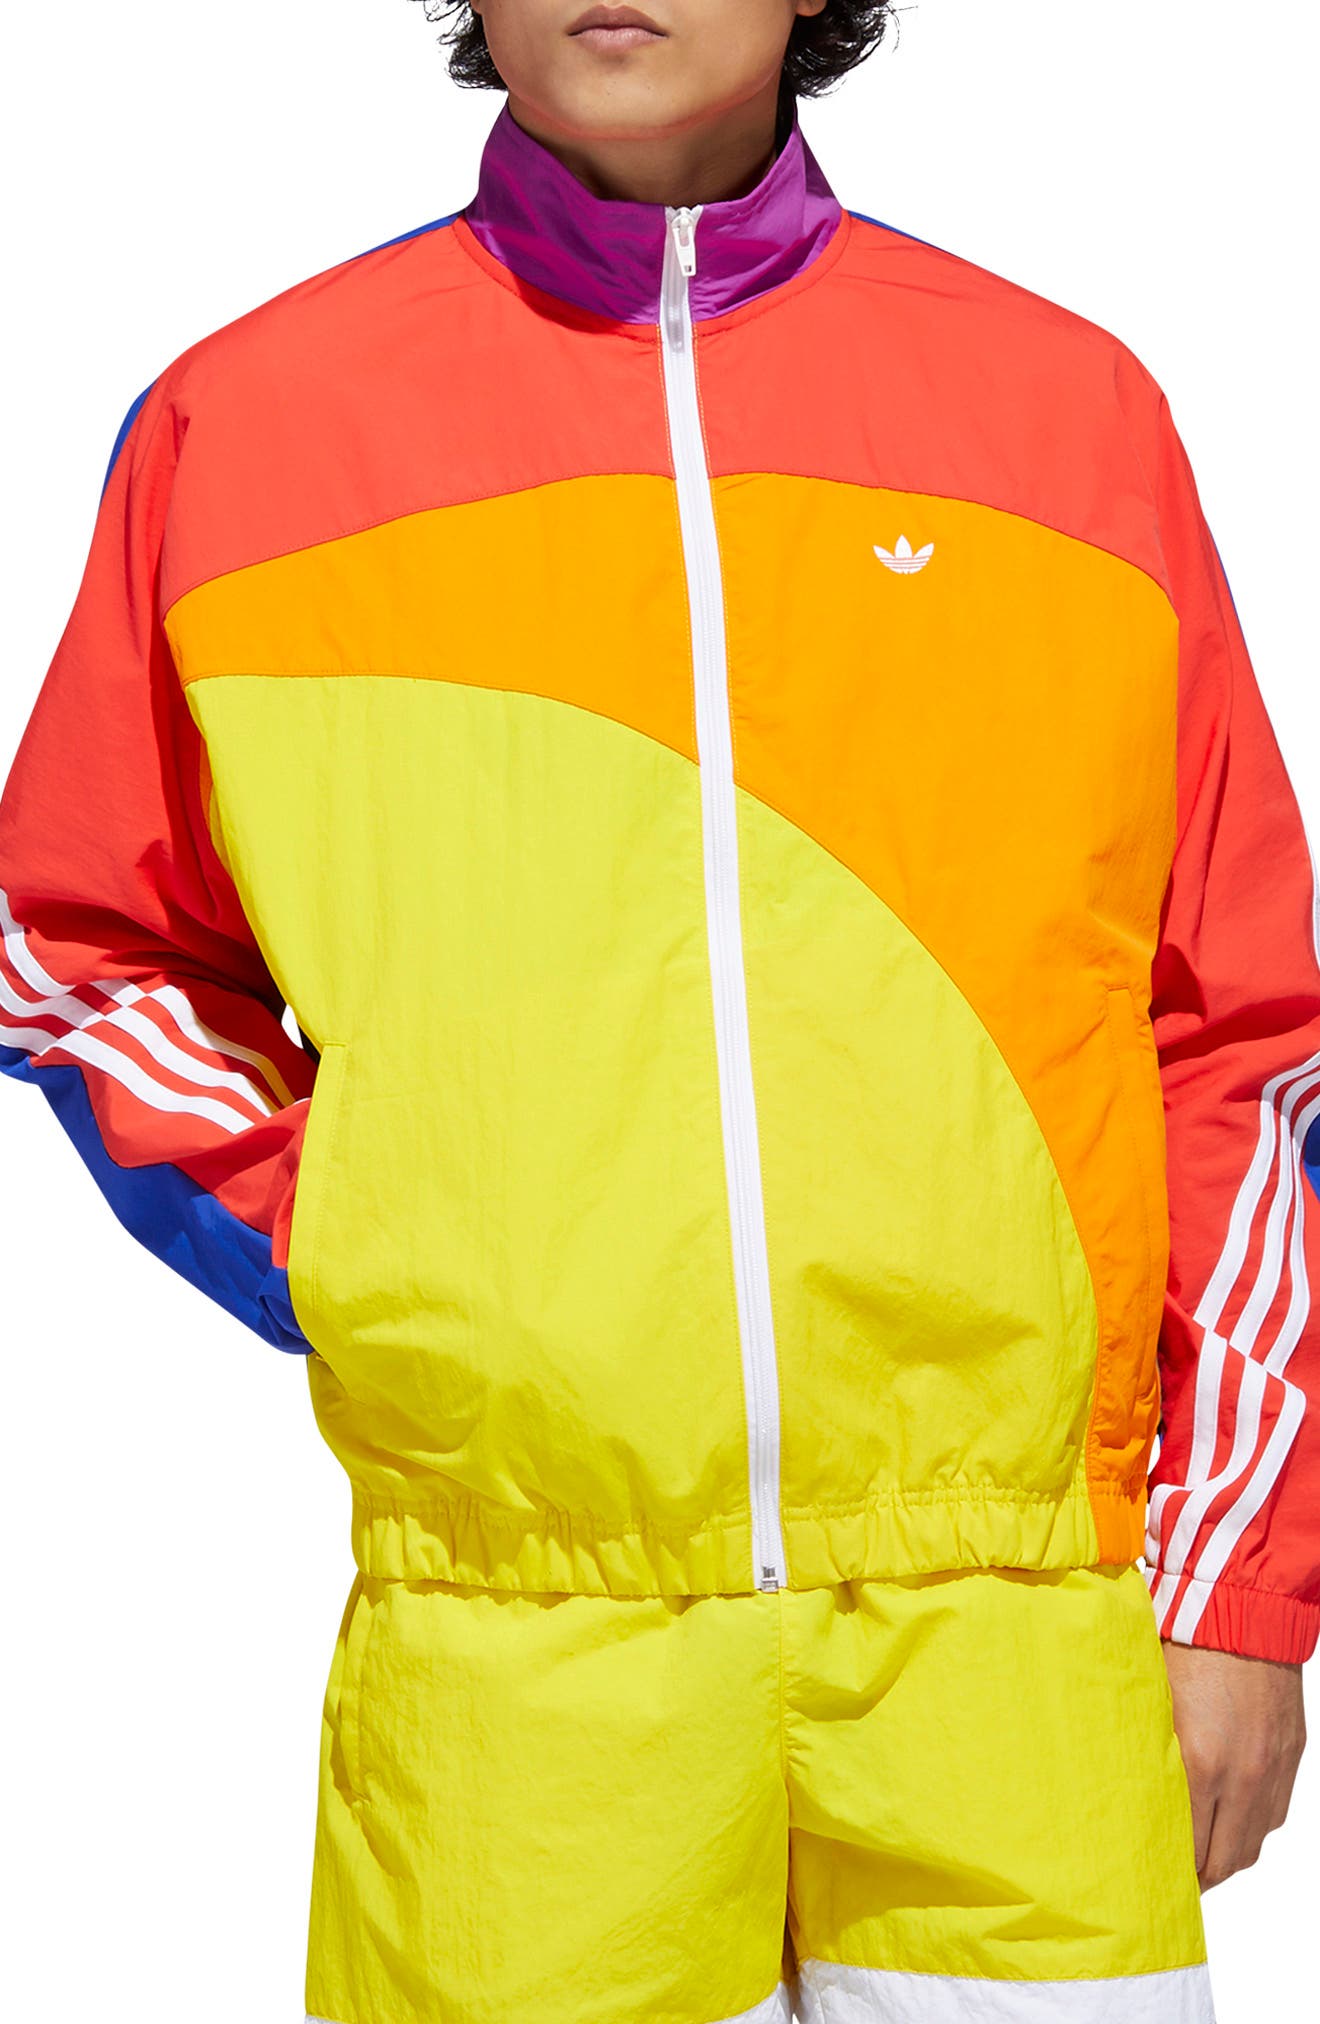 adidas rainbow reflective jacket